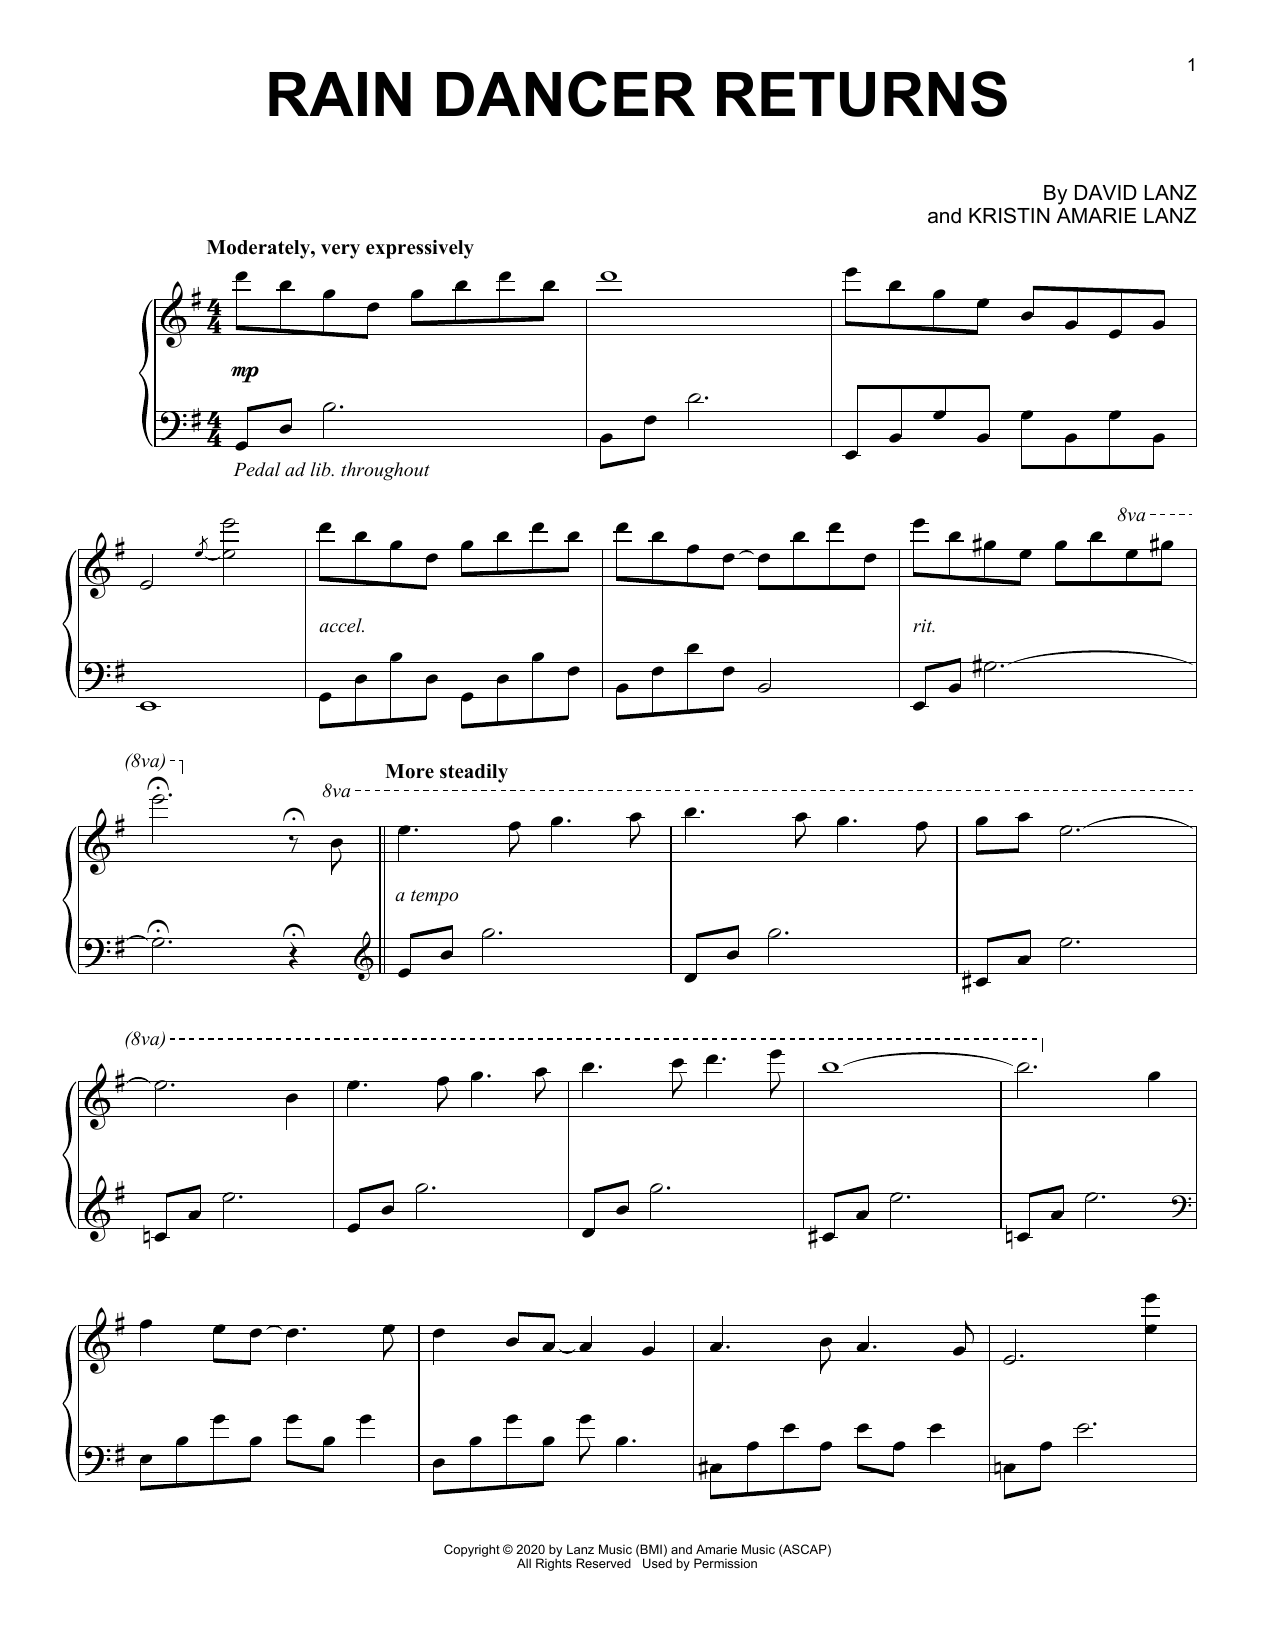 David Lanz Rain Dancer Returns Sheet Music Notes & Chords for Piano Solo - Download or Print PDF